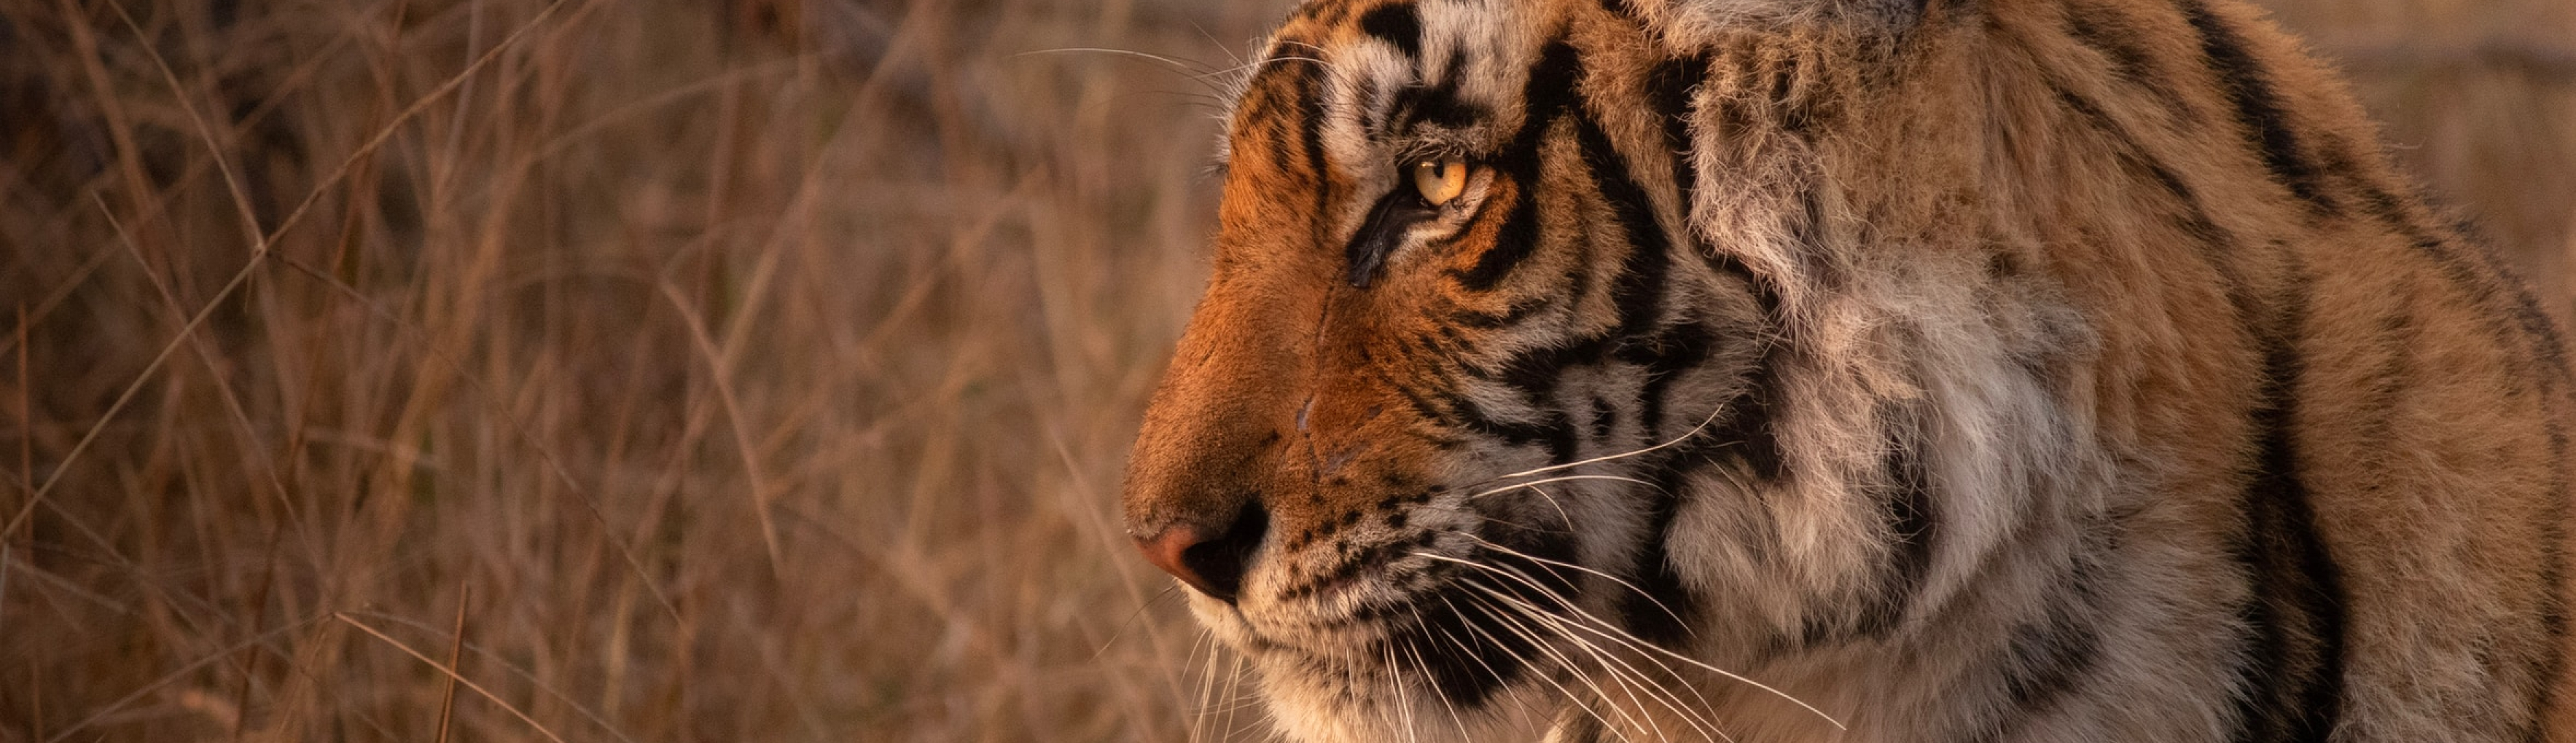 Full width Tiger image